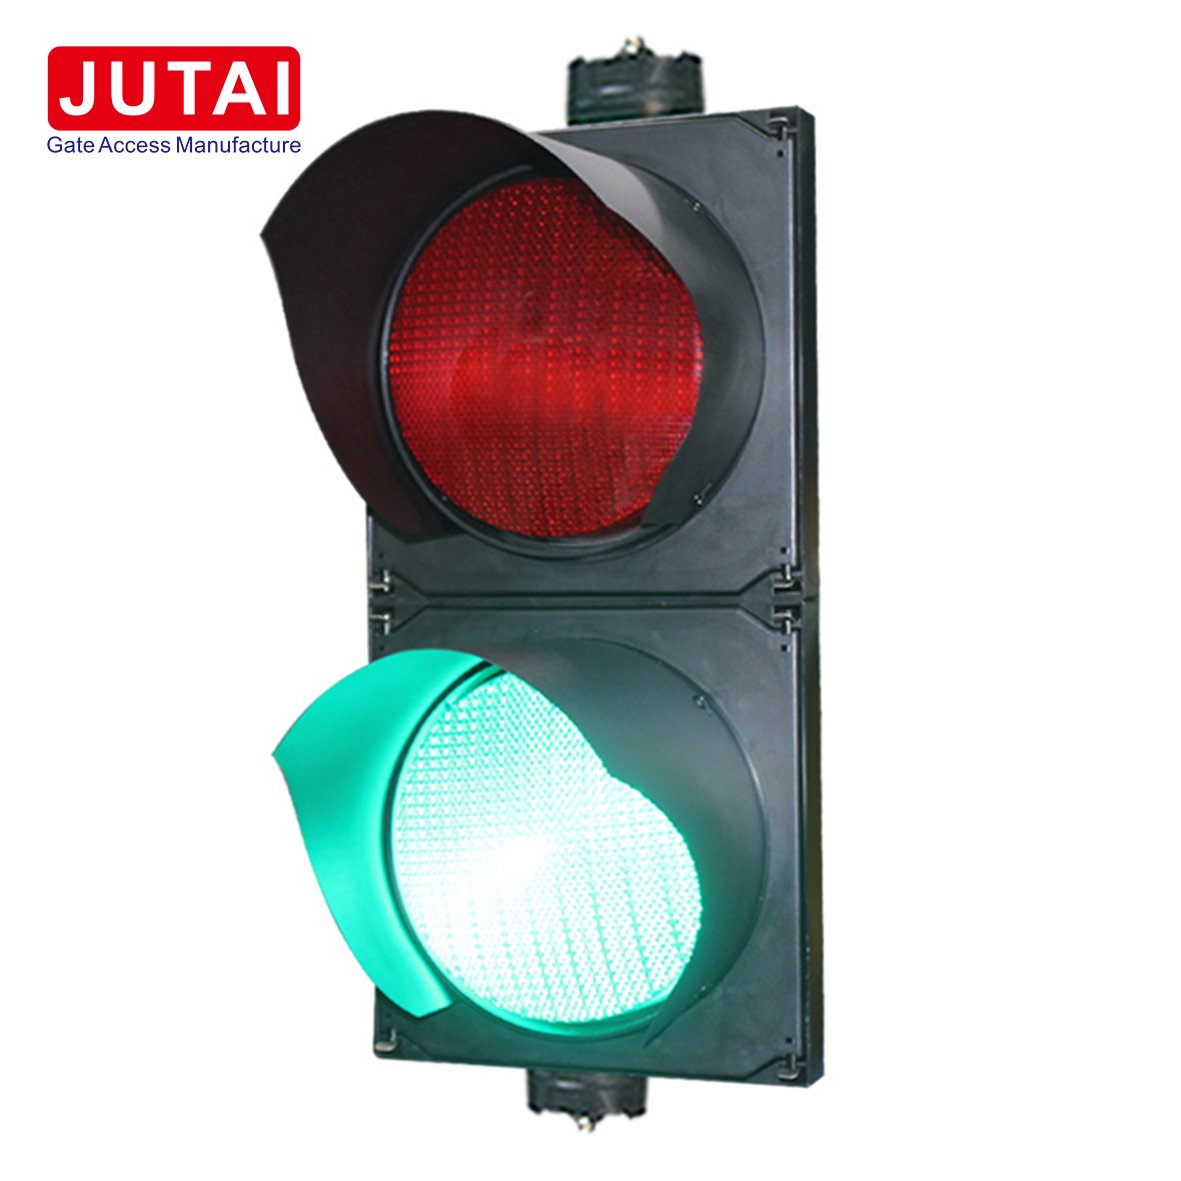 200mm diameter green and red high flux traffic light 